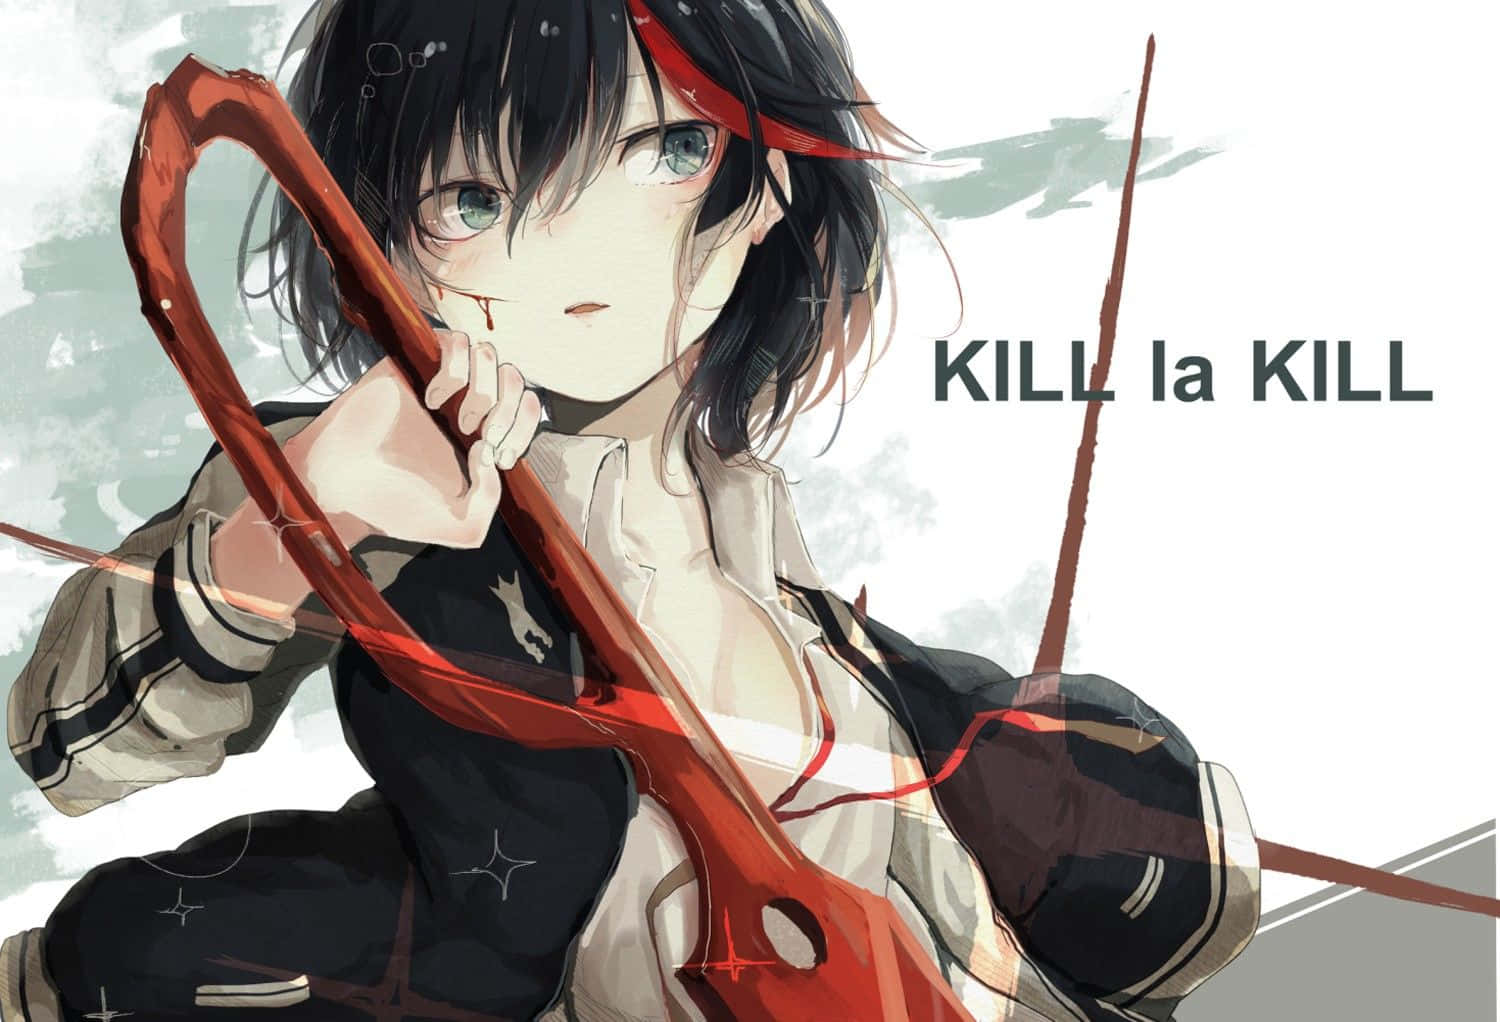 Hot Anime Ryuko Matoi Kill